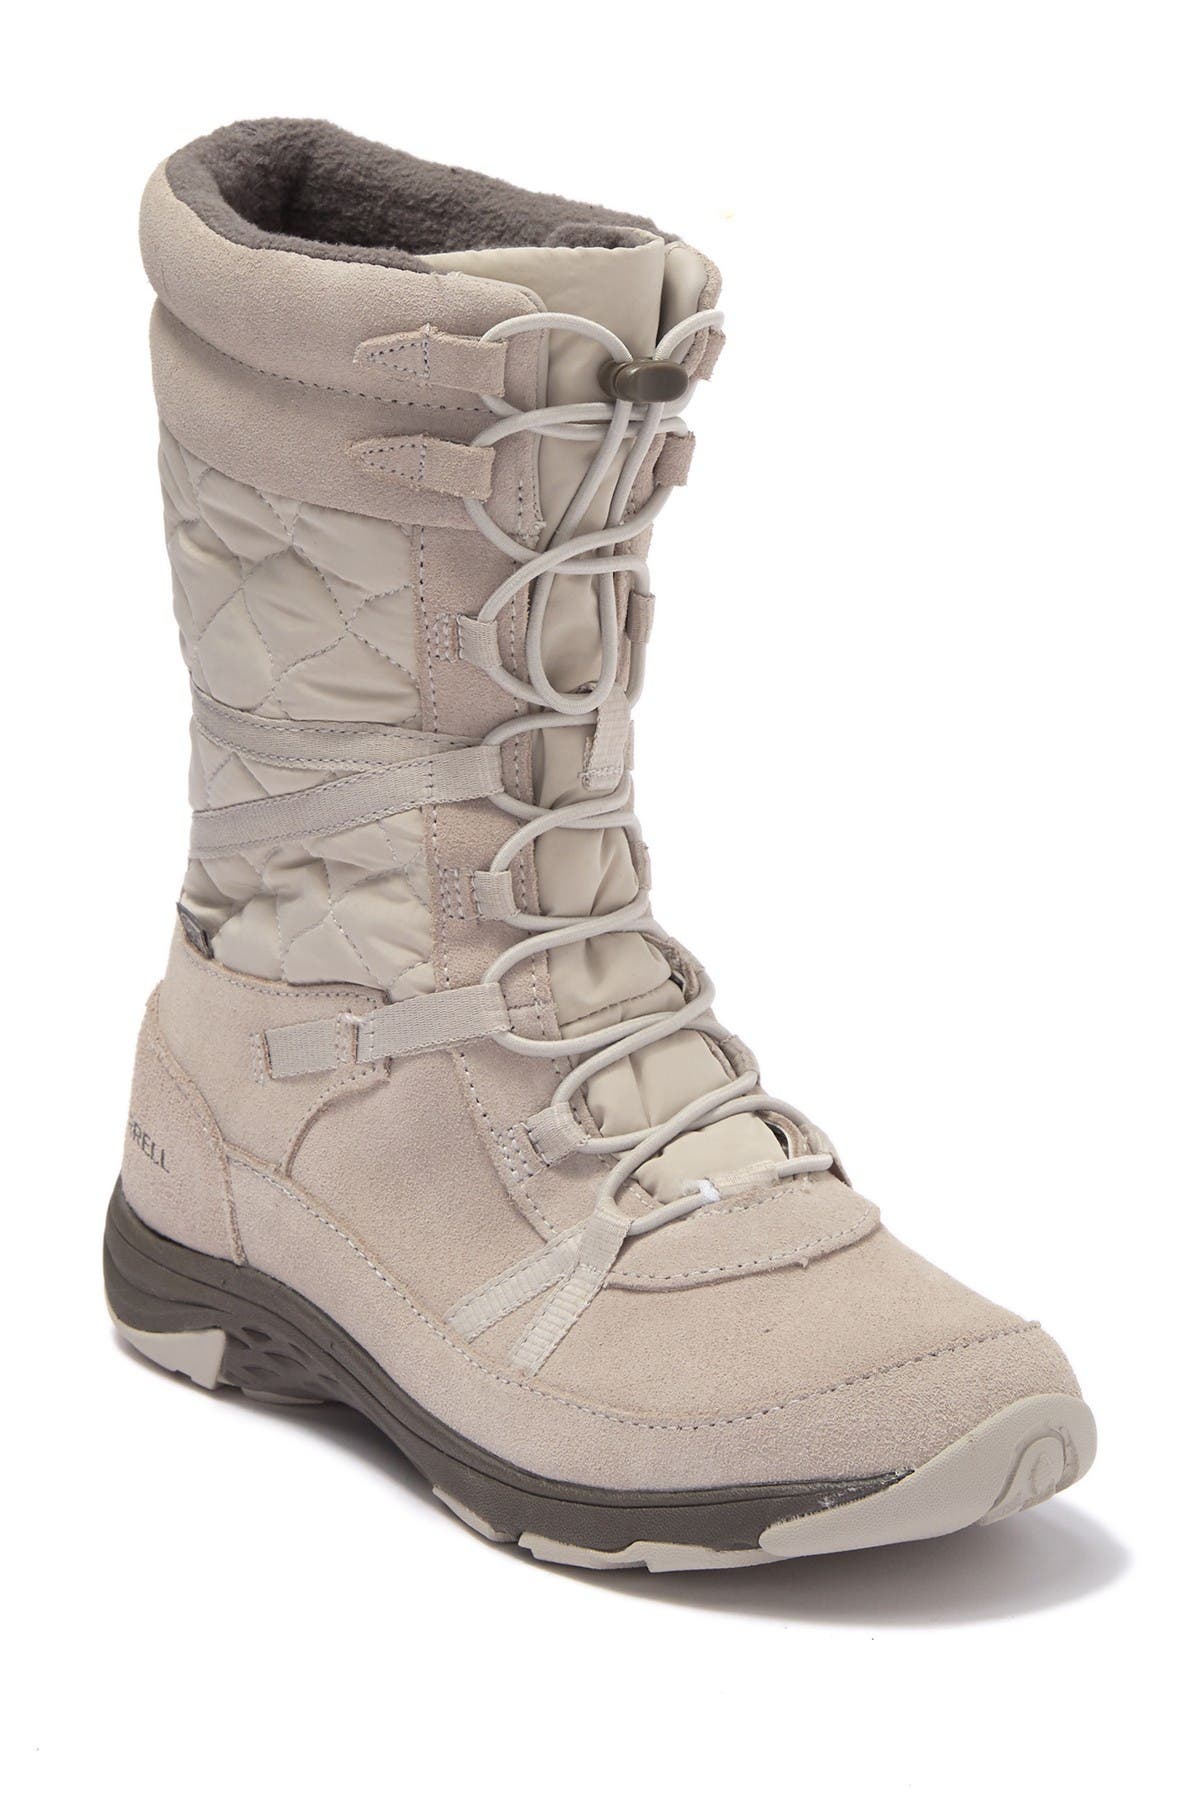 merrell tall waterproof boots